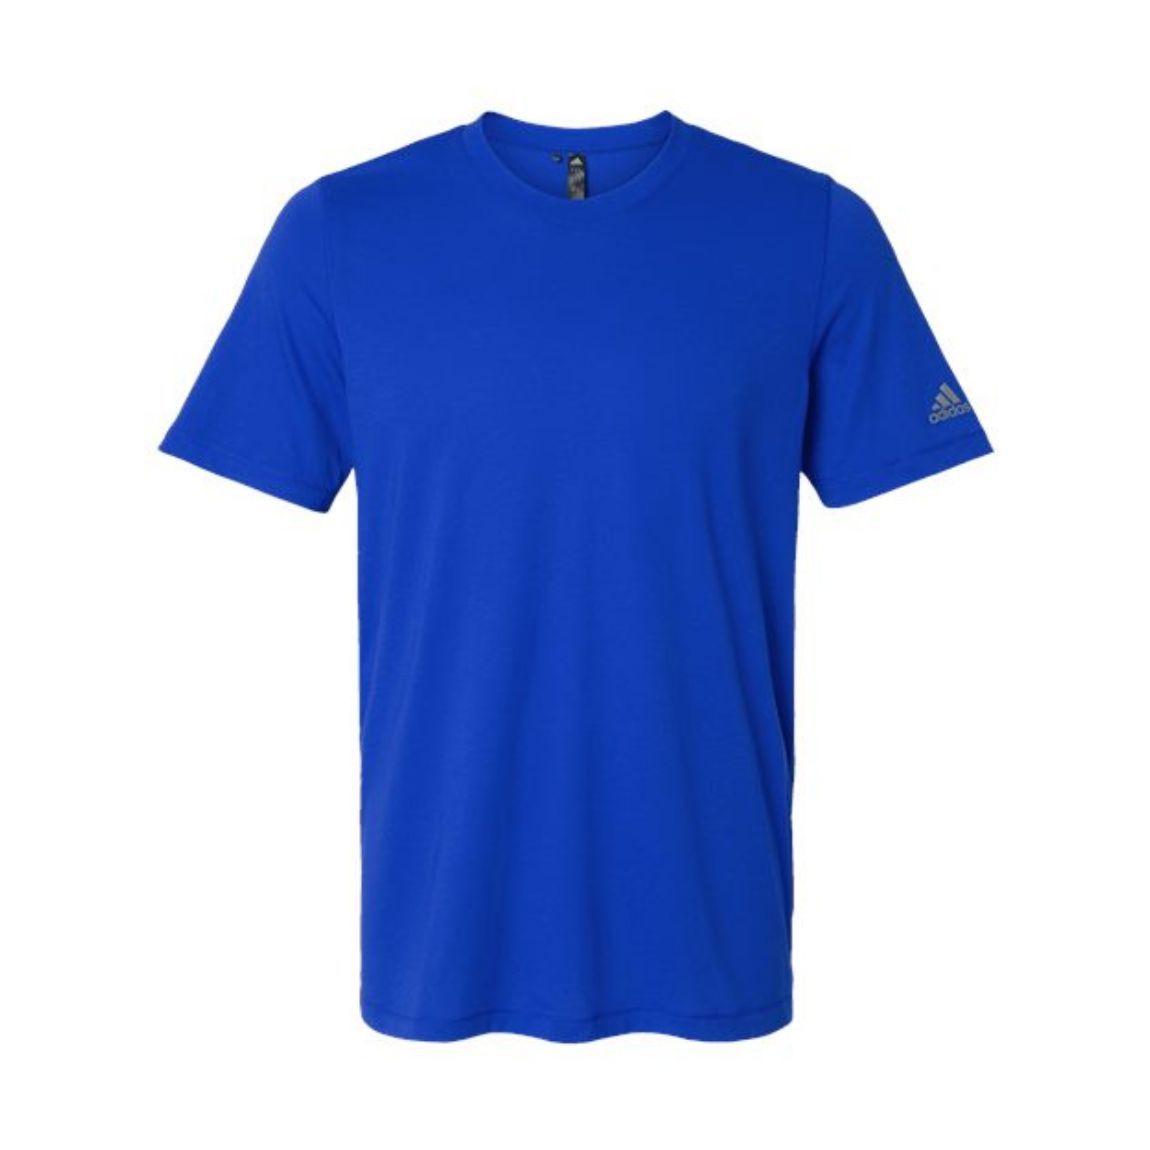 Adidas - Blended T-Shirt